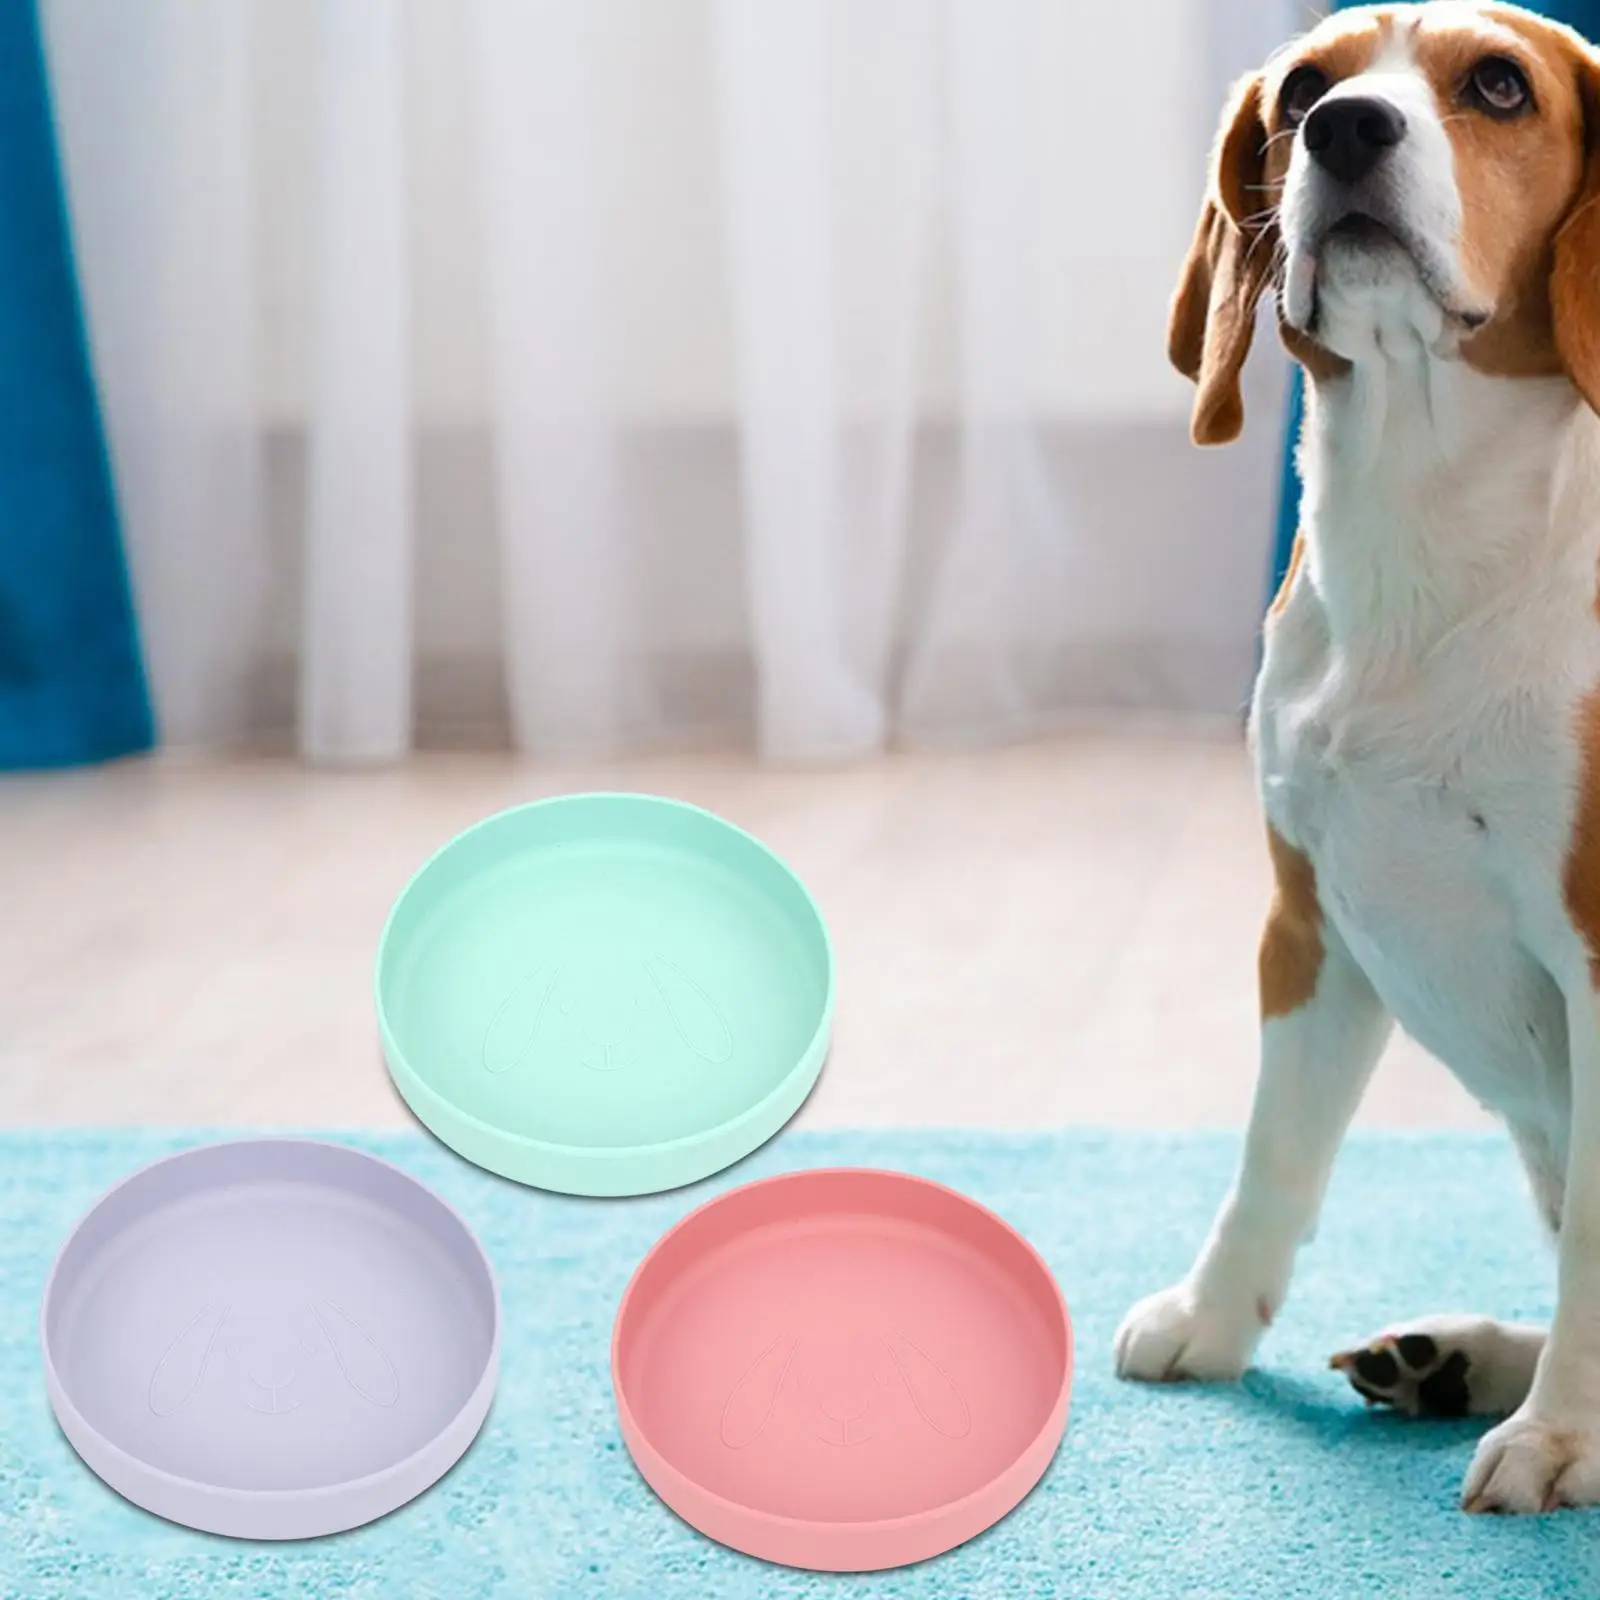 Cat Bowl No Portable 7 Inches Dog Food Bowl Silicone Feeding Bowl for Walking